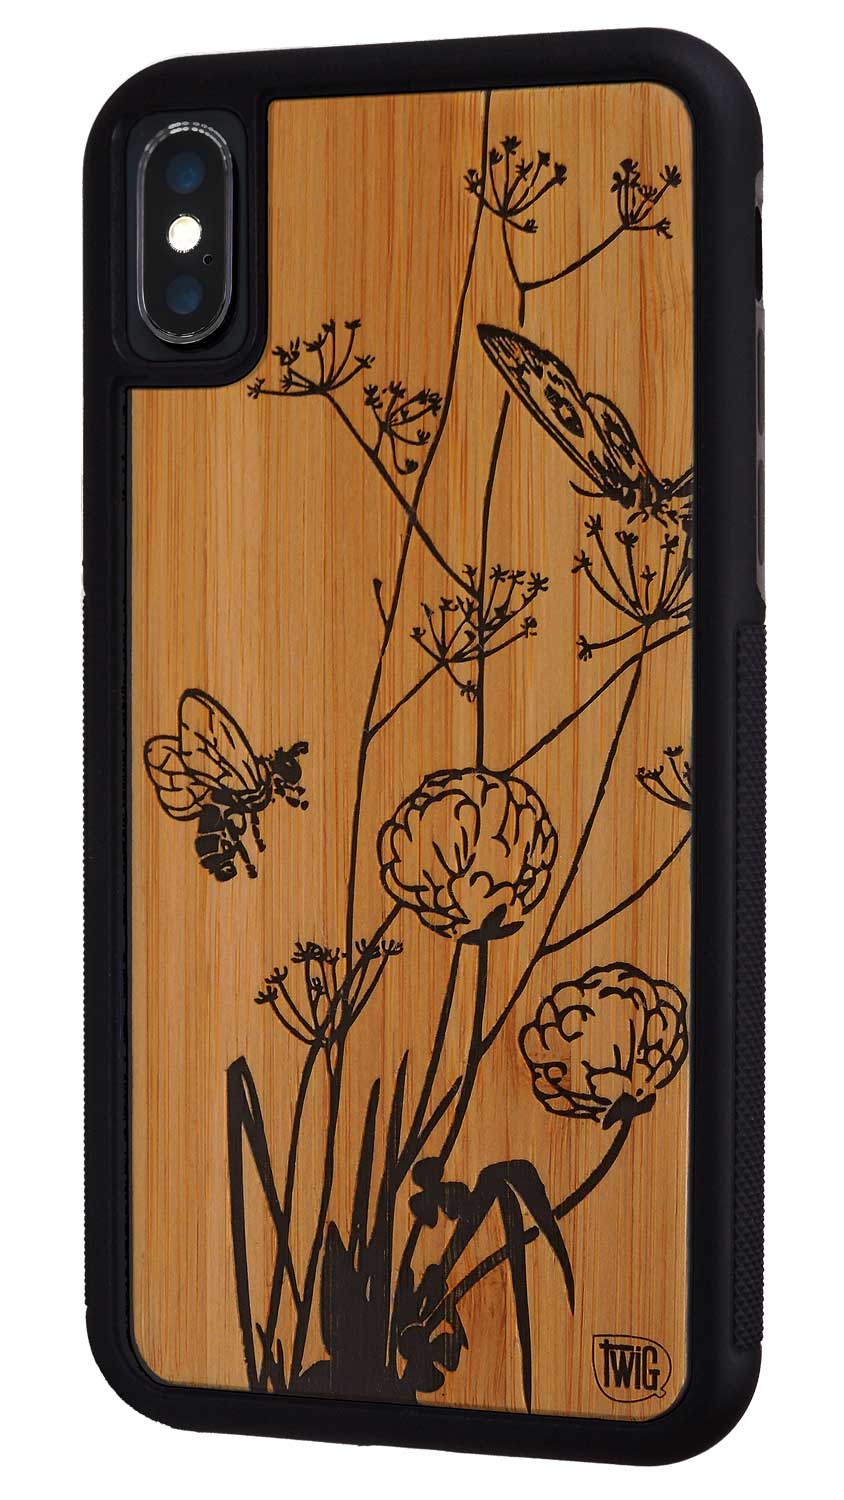 Beeutiful - Bamboo iPhone Case, iPhone Case - Twig Case Co.